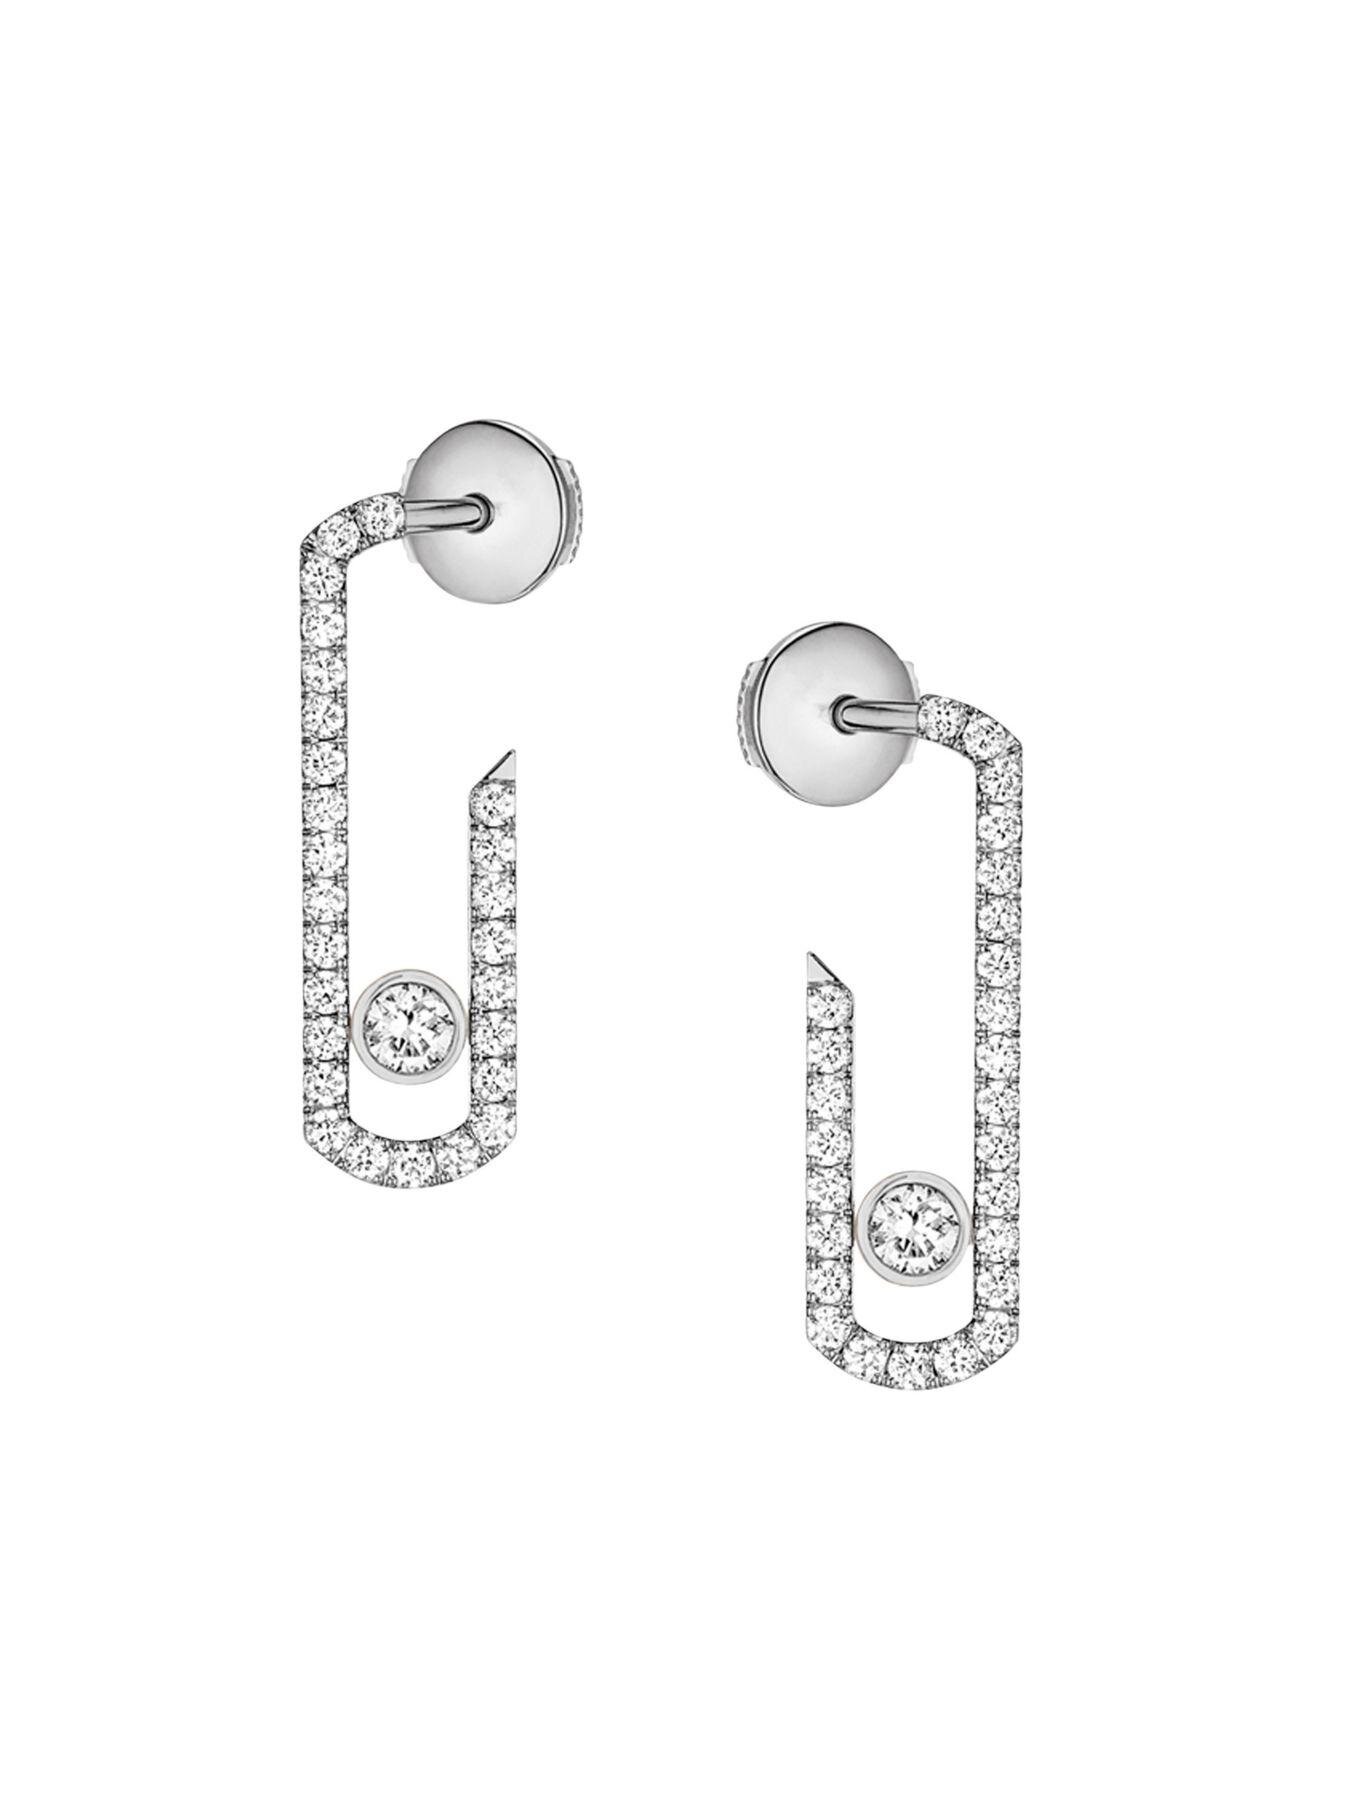 Messika Move Addiction Earrings in 18K White Gold & Diamond Pavé.jpg